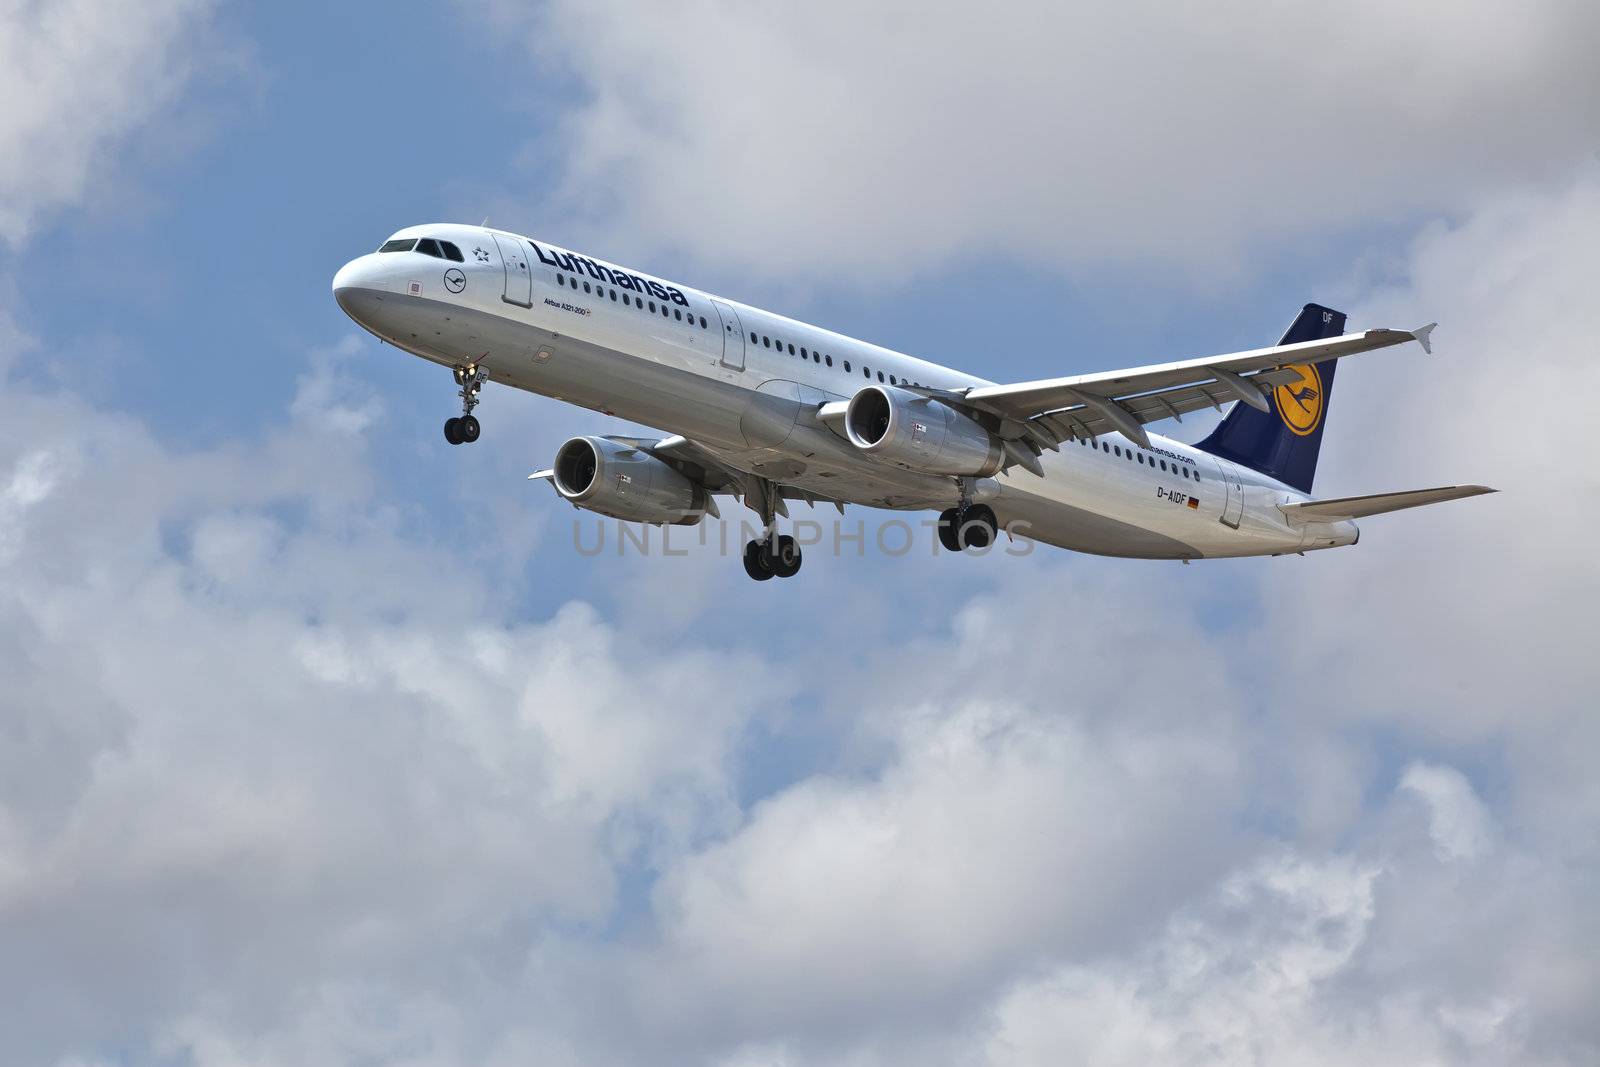 Lufthansa A321-200 by PhotoWorks